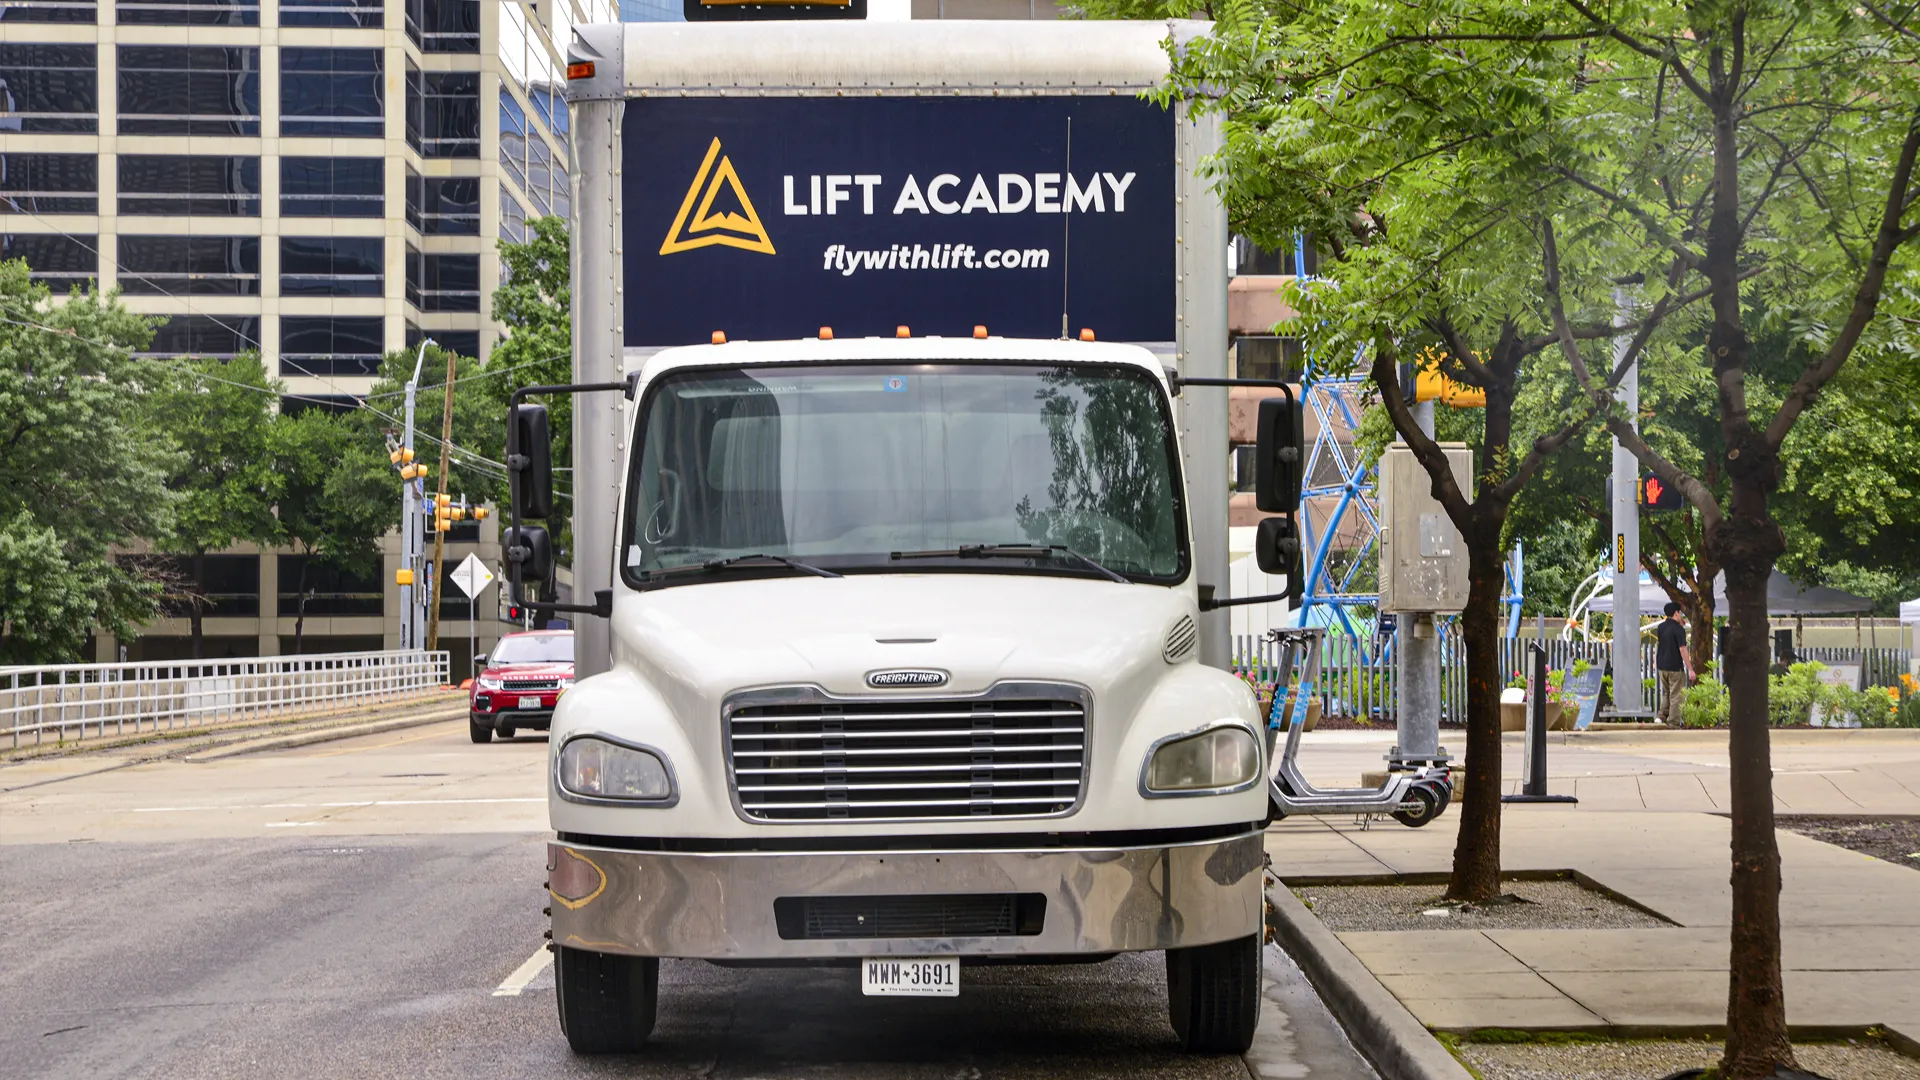 Lift Academy Rolling Billboard